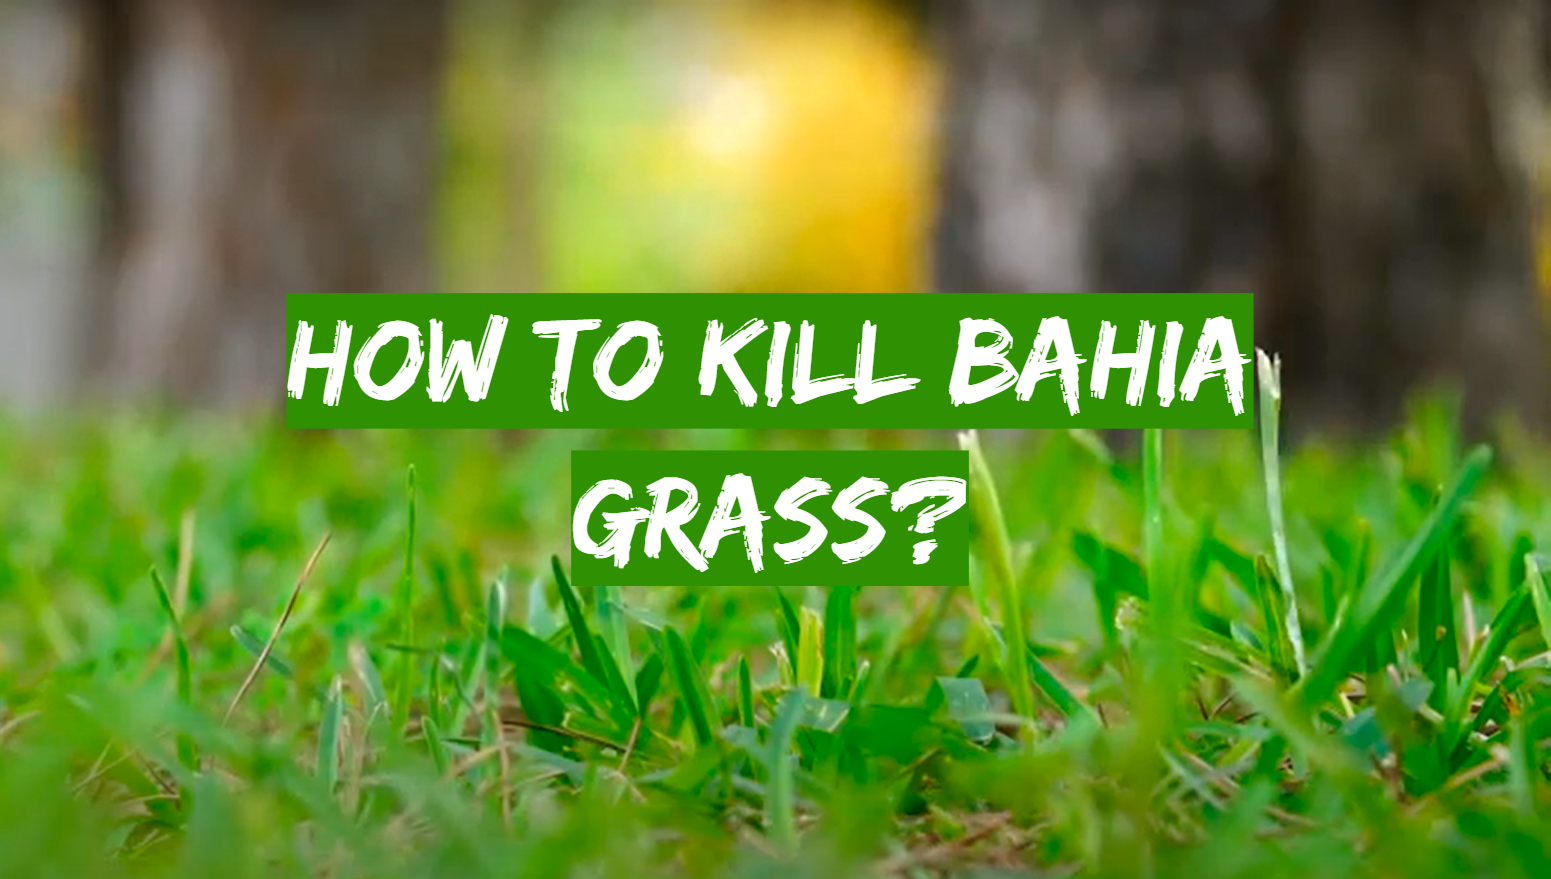 How to Kill Bahia Grass?